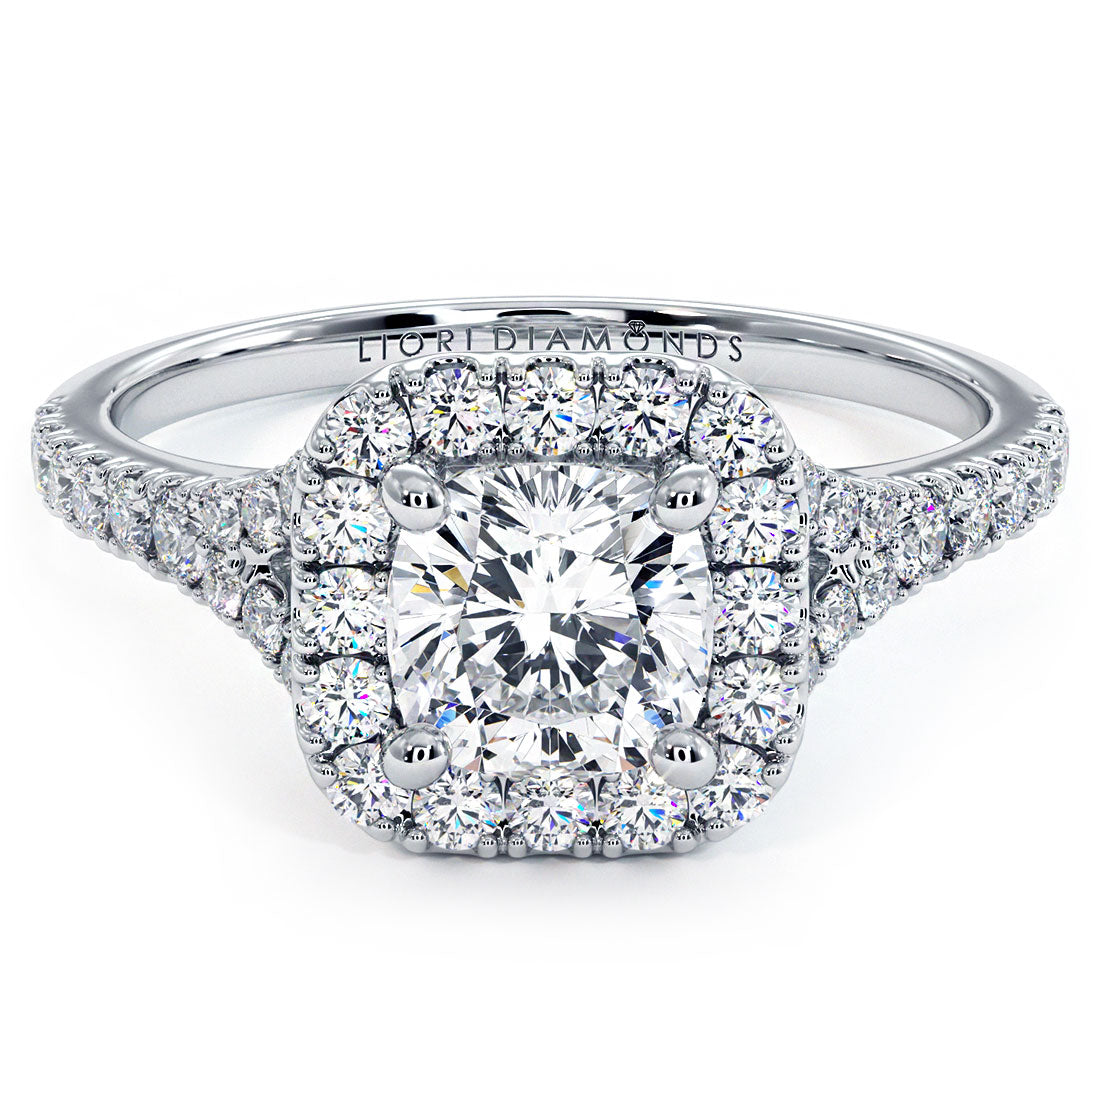 14K White Gold 1.3 Carat Natural Cushion Cut Diamond Halo Engagement Ring  VS1 | eBay